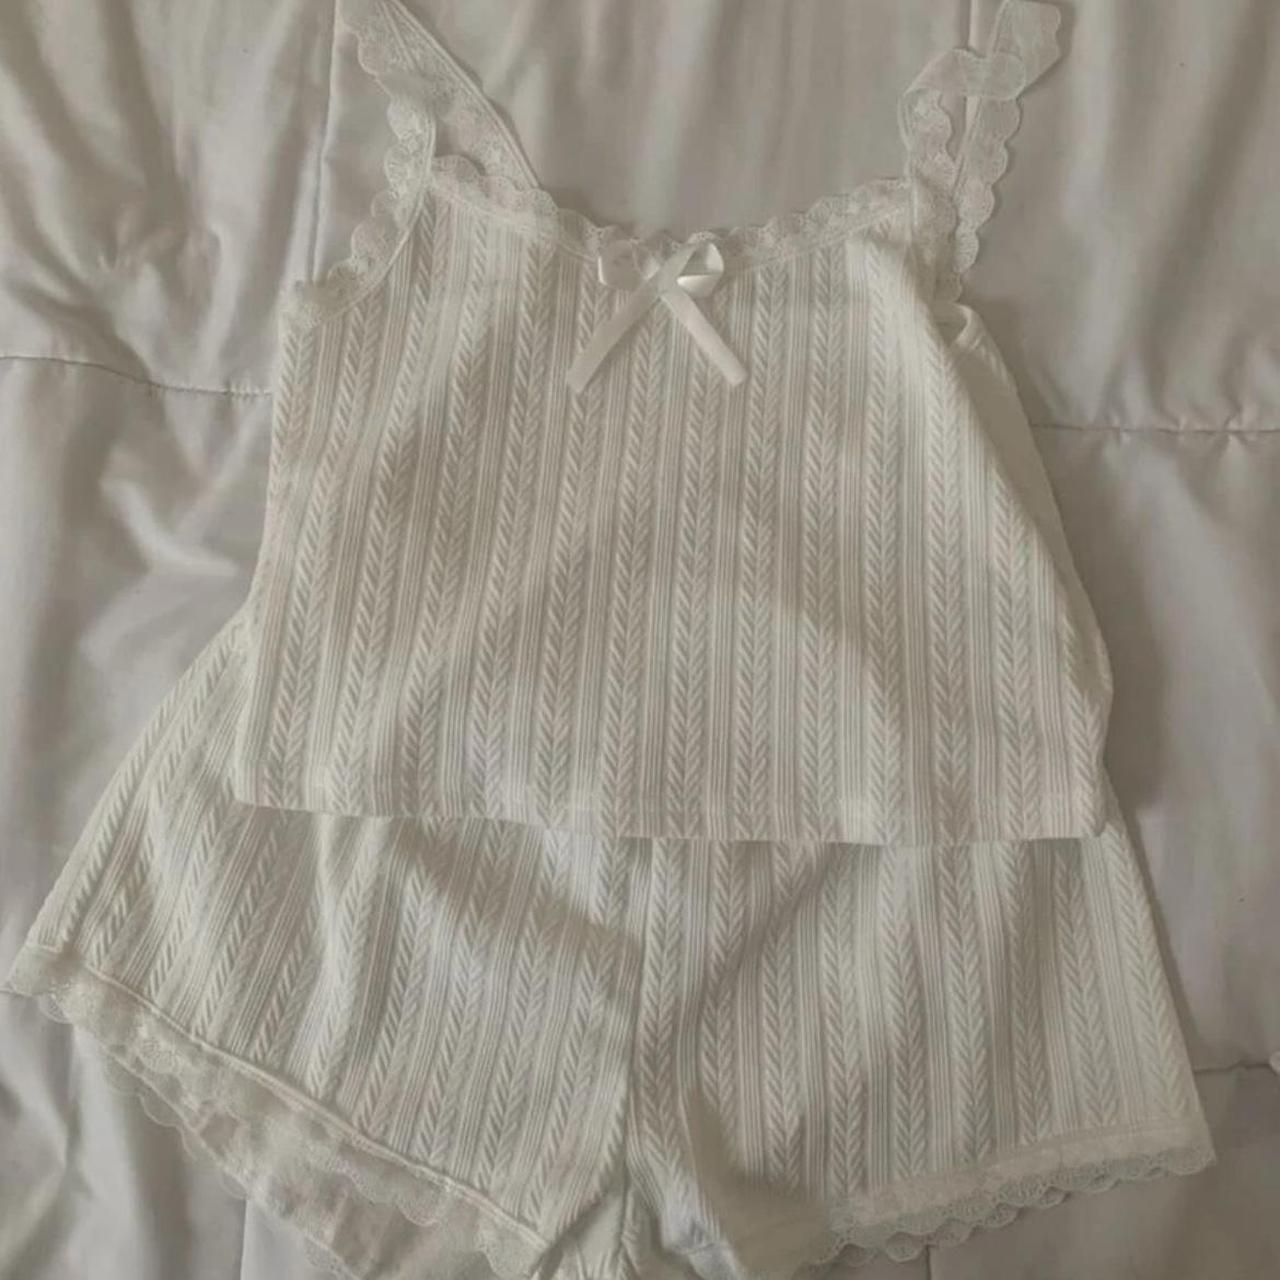 Brandy melville heart pajama set #coquette